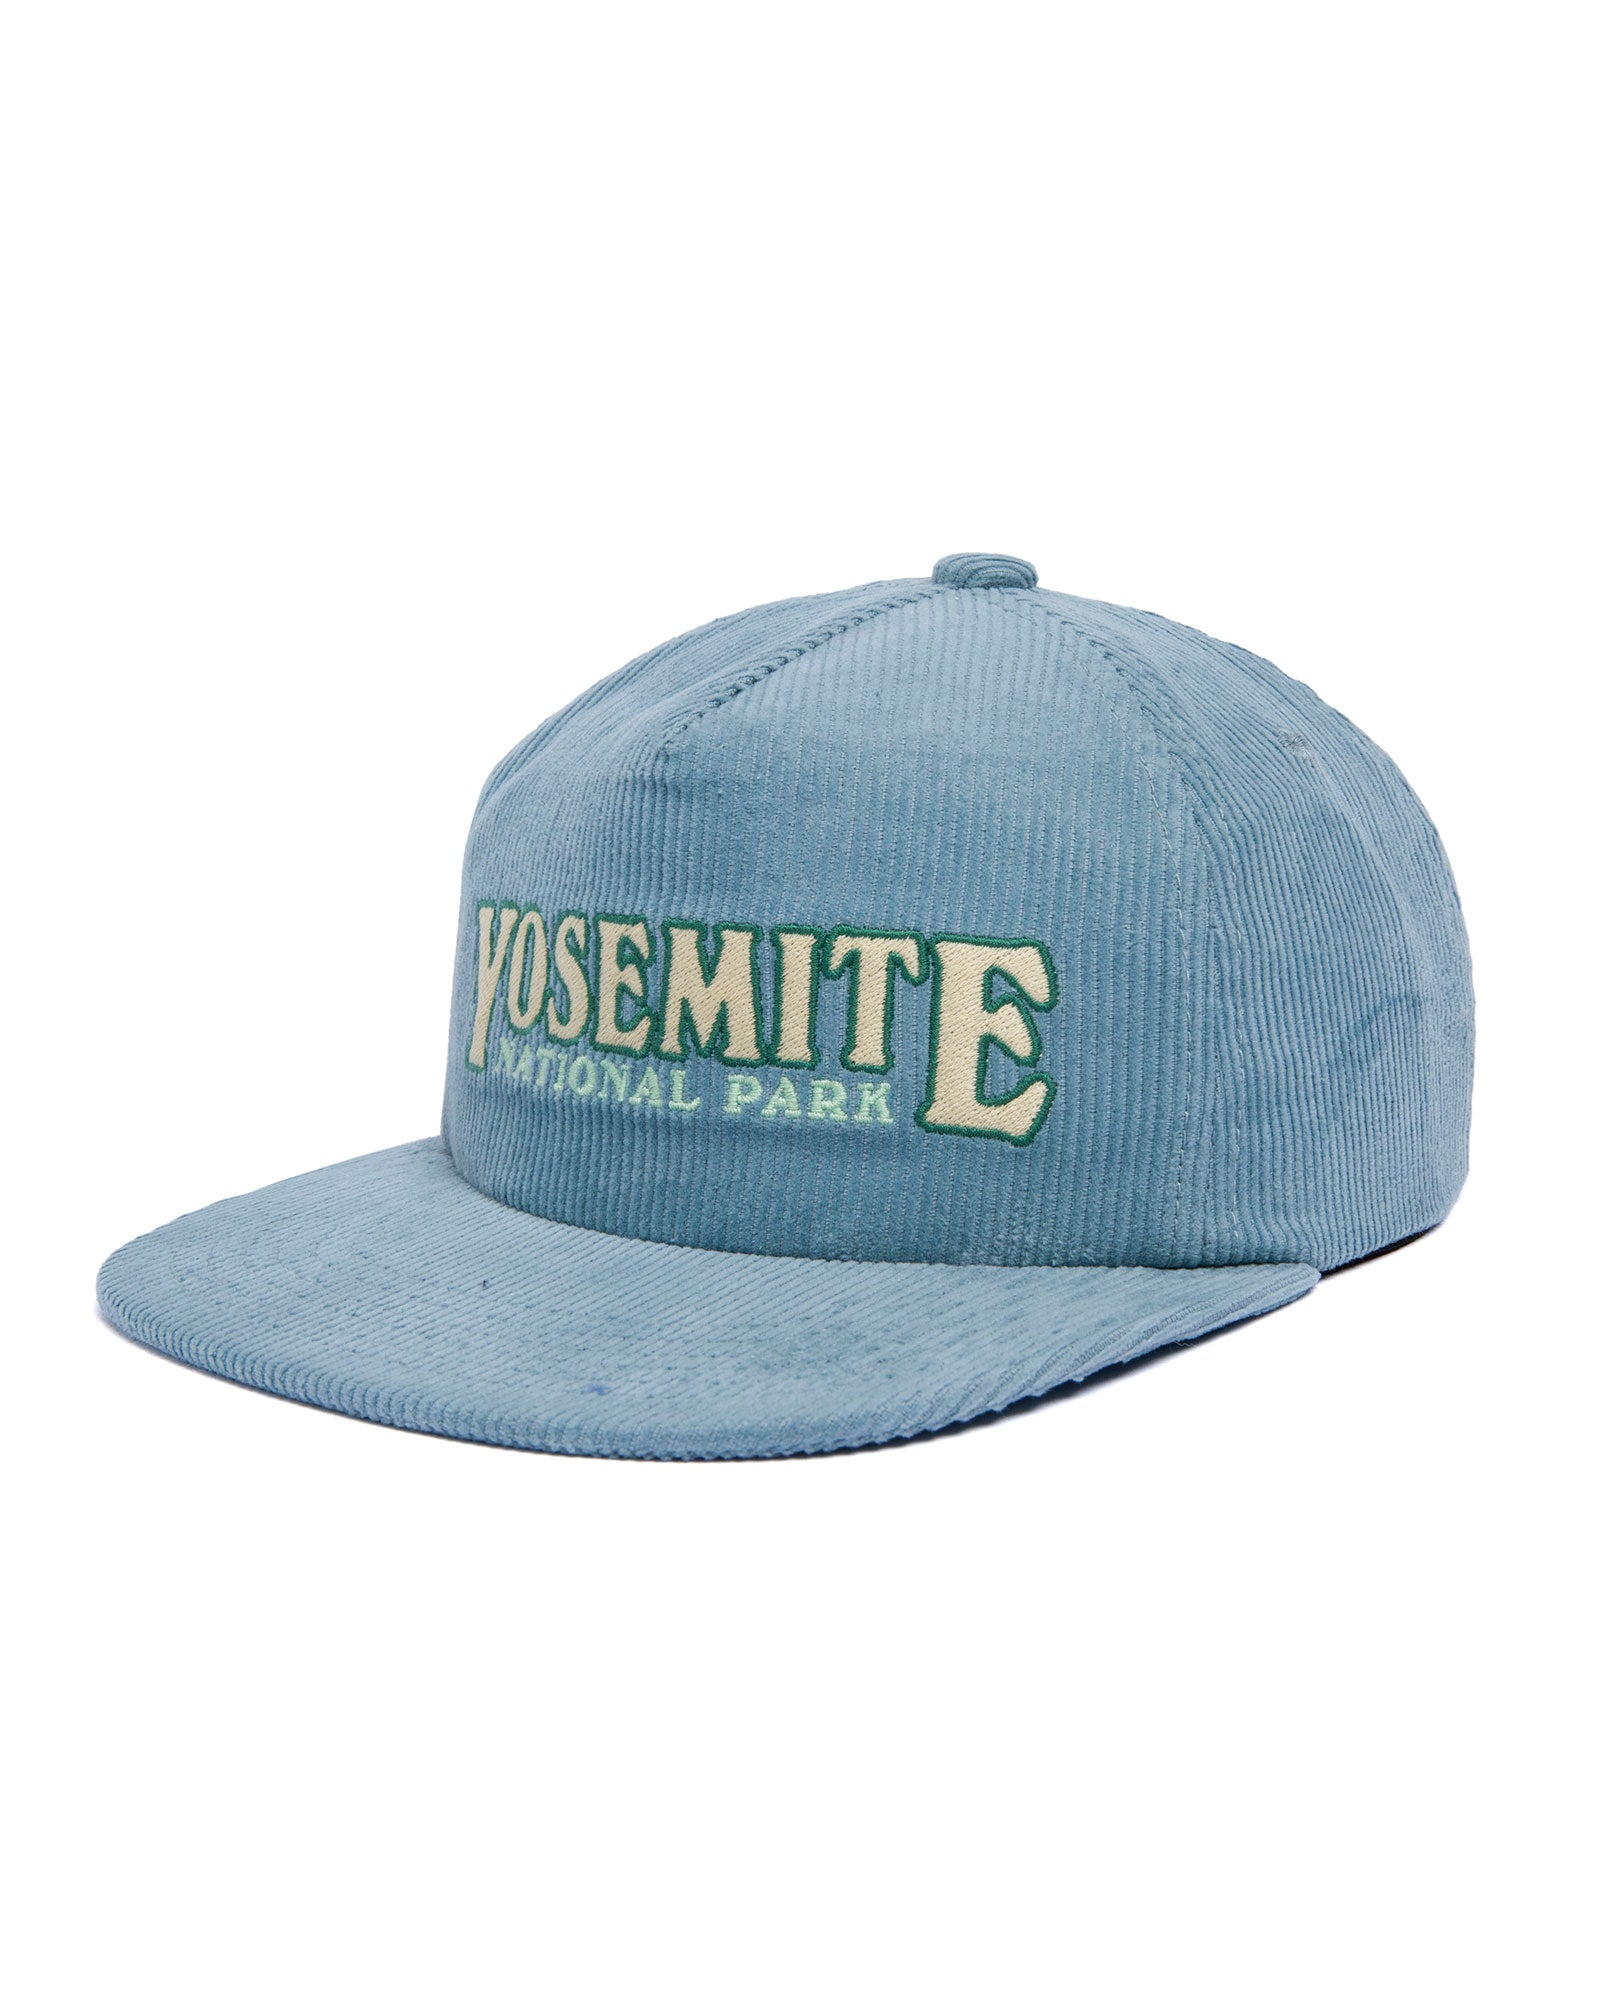 Shop Yosemite National Park Cord Hat Inspired by Yosemite National Park | dusty-teal